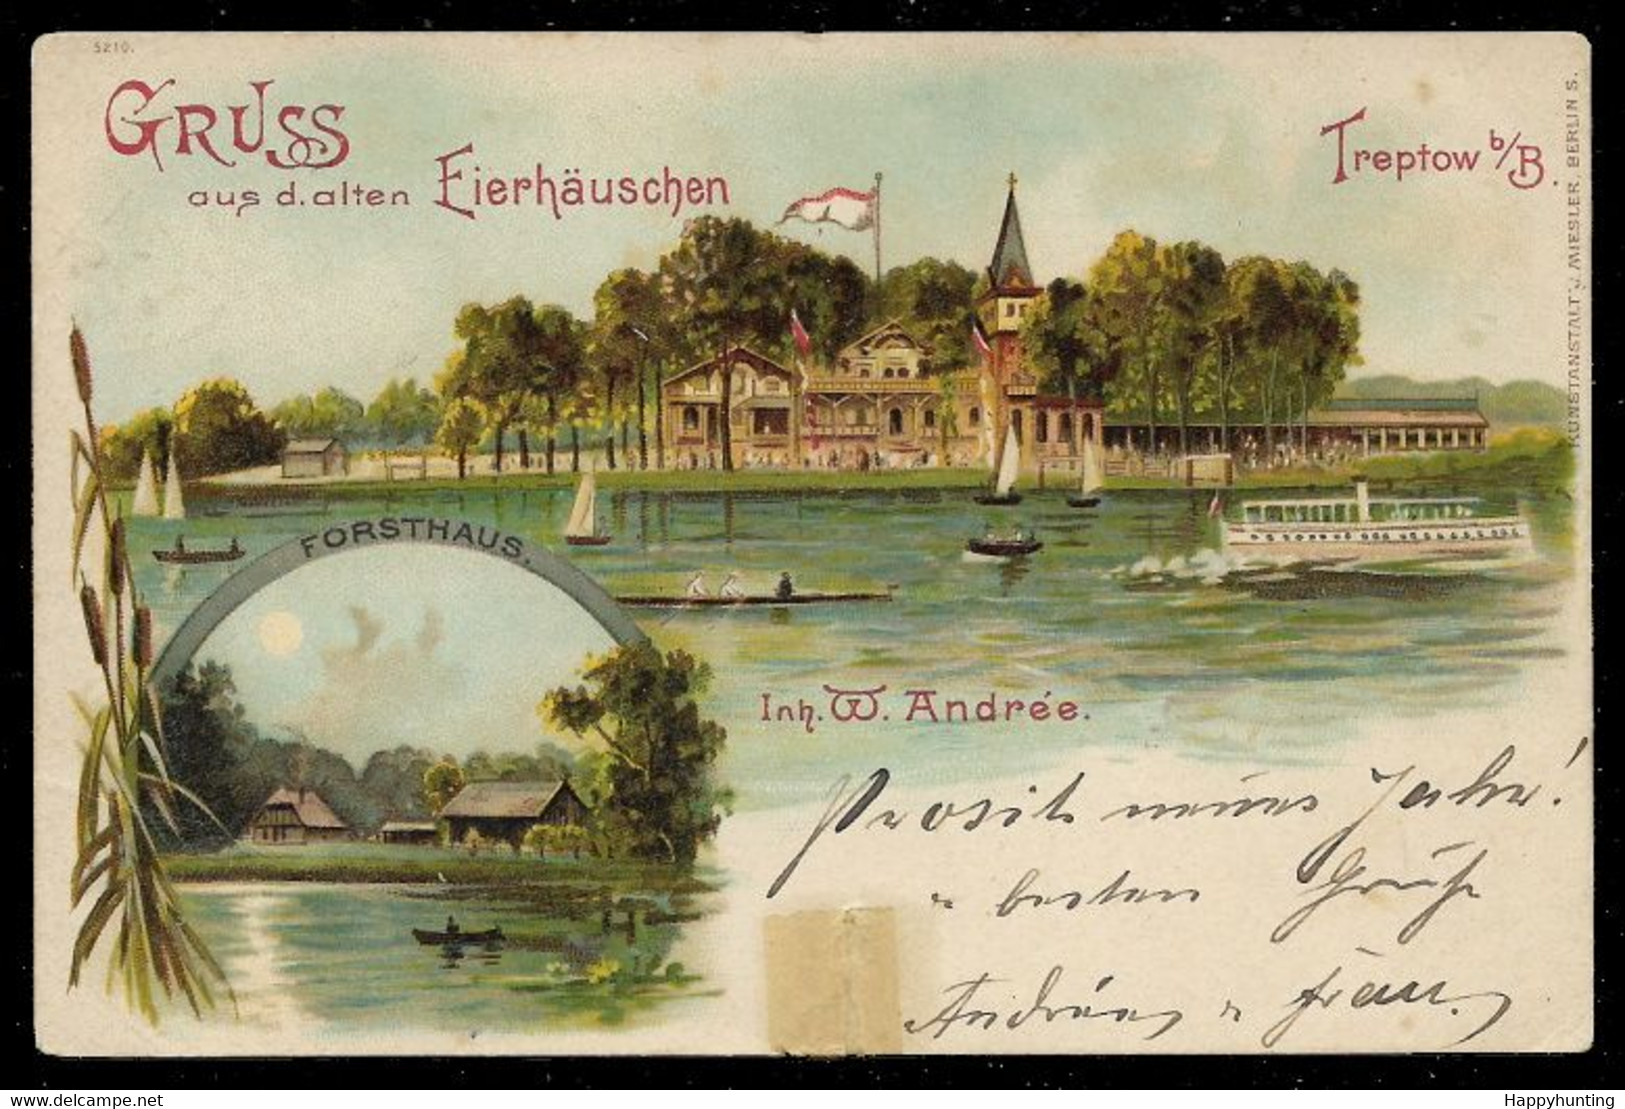 1897 LITHO AK TREPTOW B/B – GRUSS AUS D. ALTEN EIERHÄUSCHEN – FORSTHAUS - GELAUFEN - Treptow